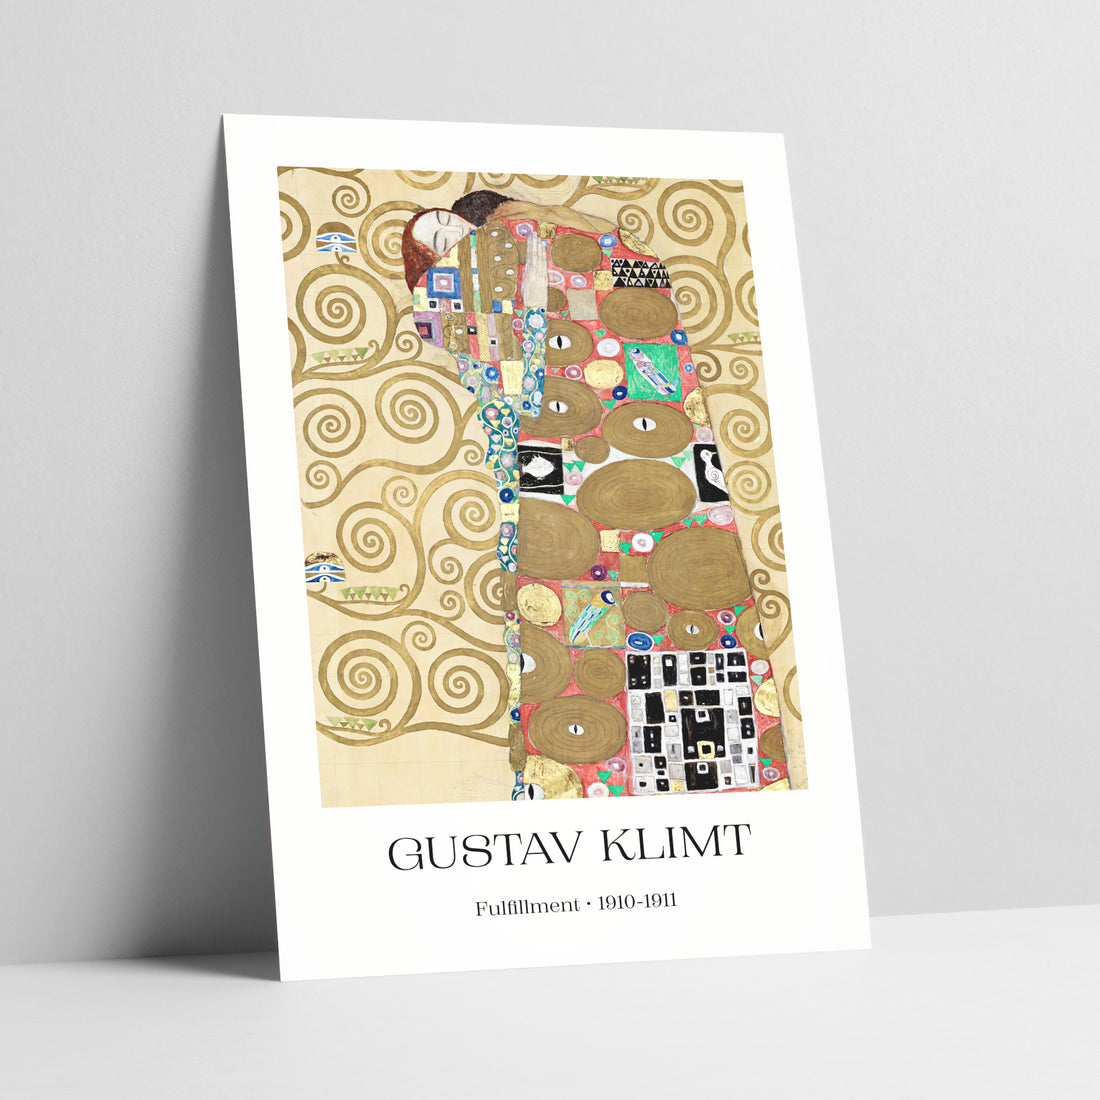 Fulfillment by Gustav Klimt Gallery Art Print